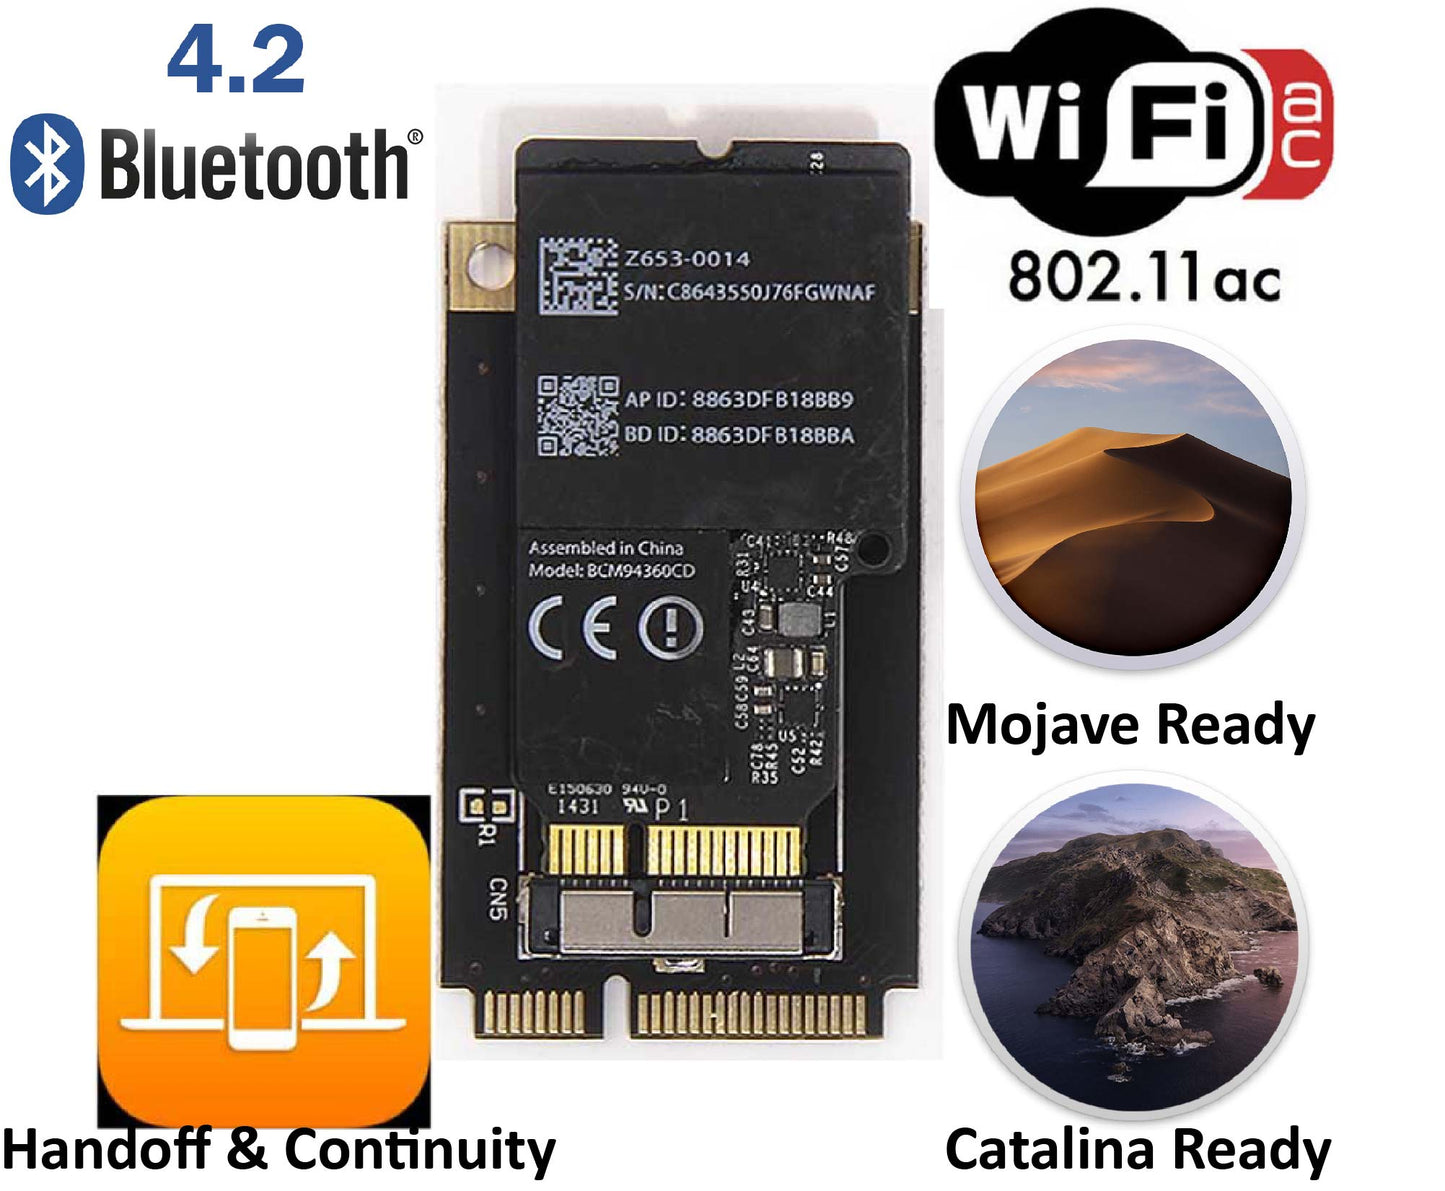 Apple Mac Pro 4,1 5,1 WiFi Upgrade Kit With Bluetooth 4.2